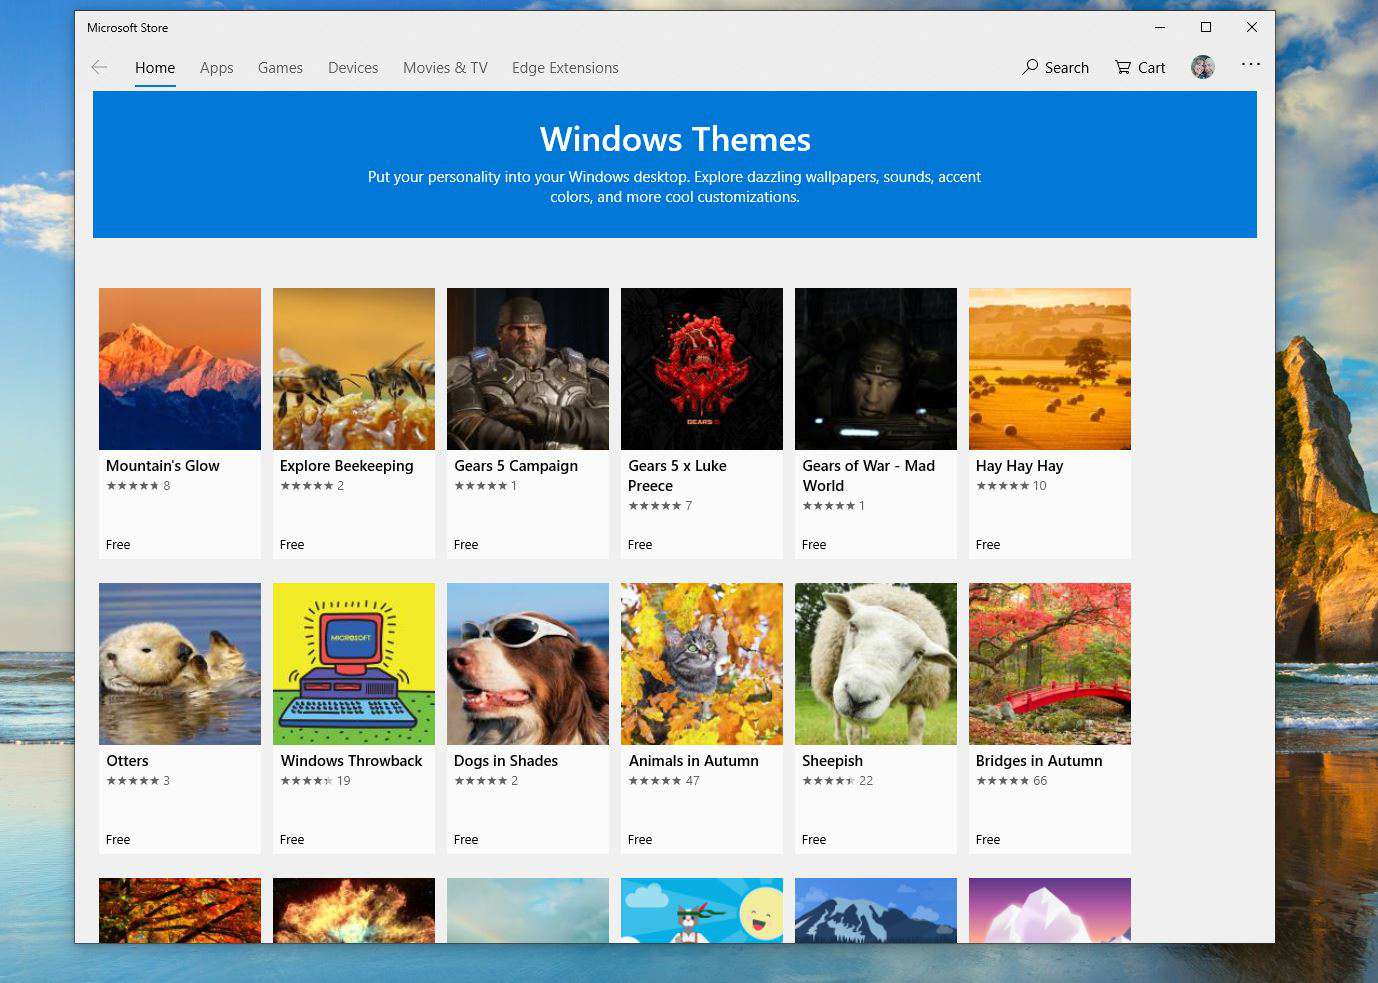 Windows-teemat Microsoft Storessa